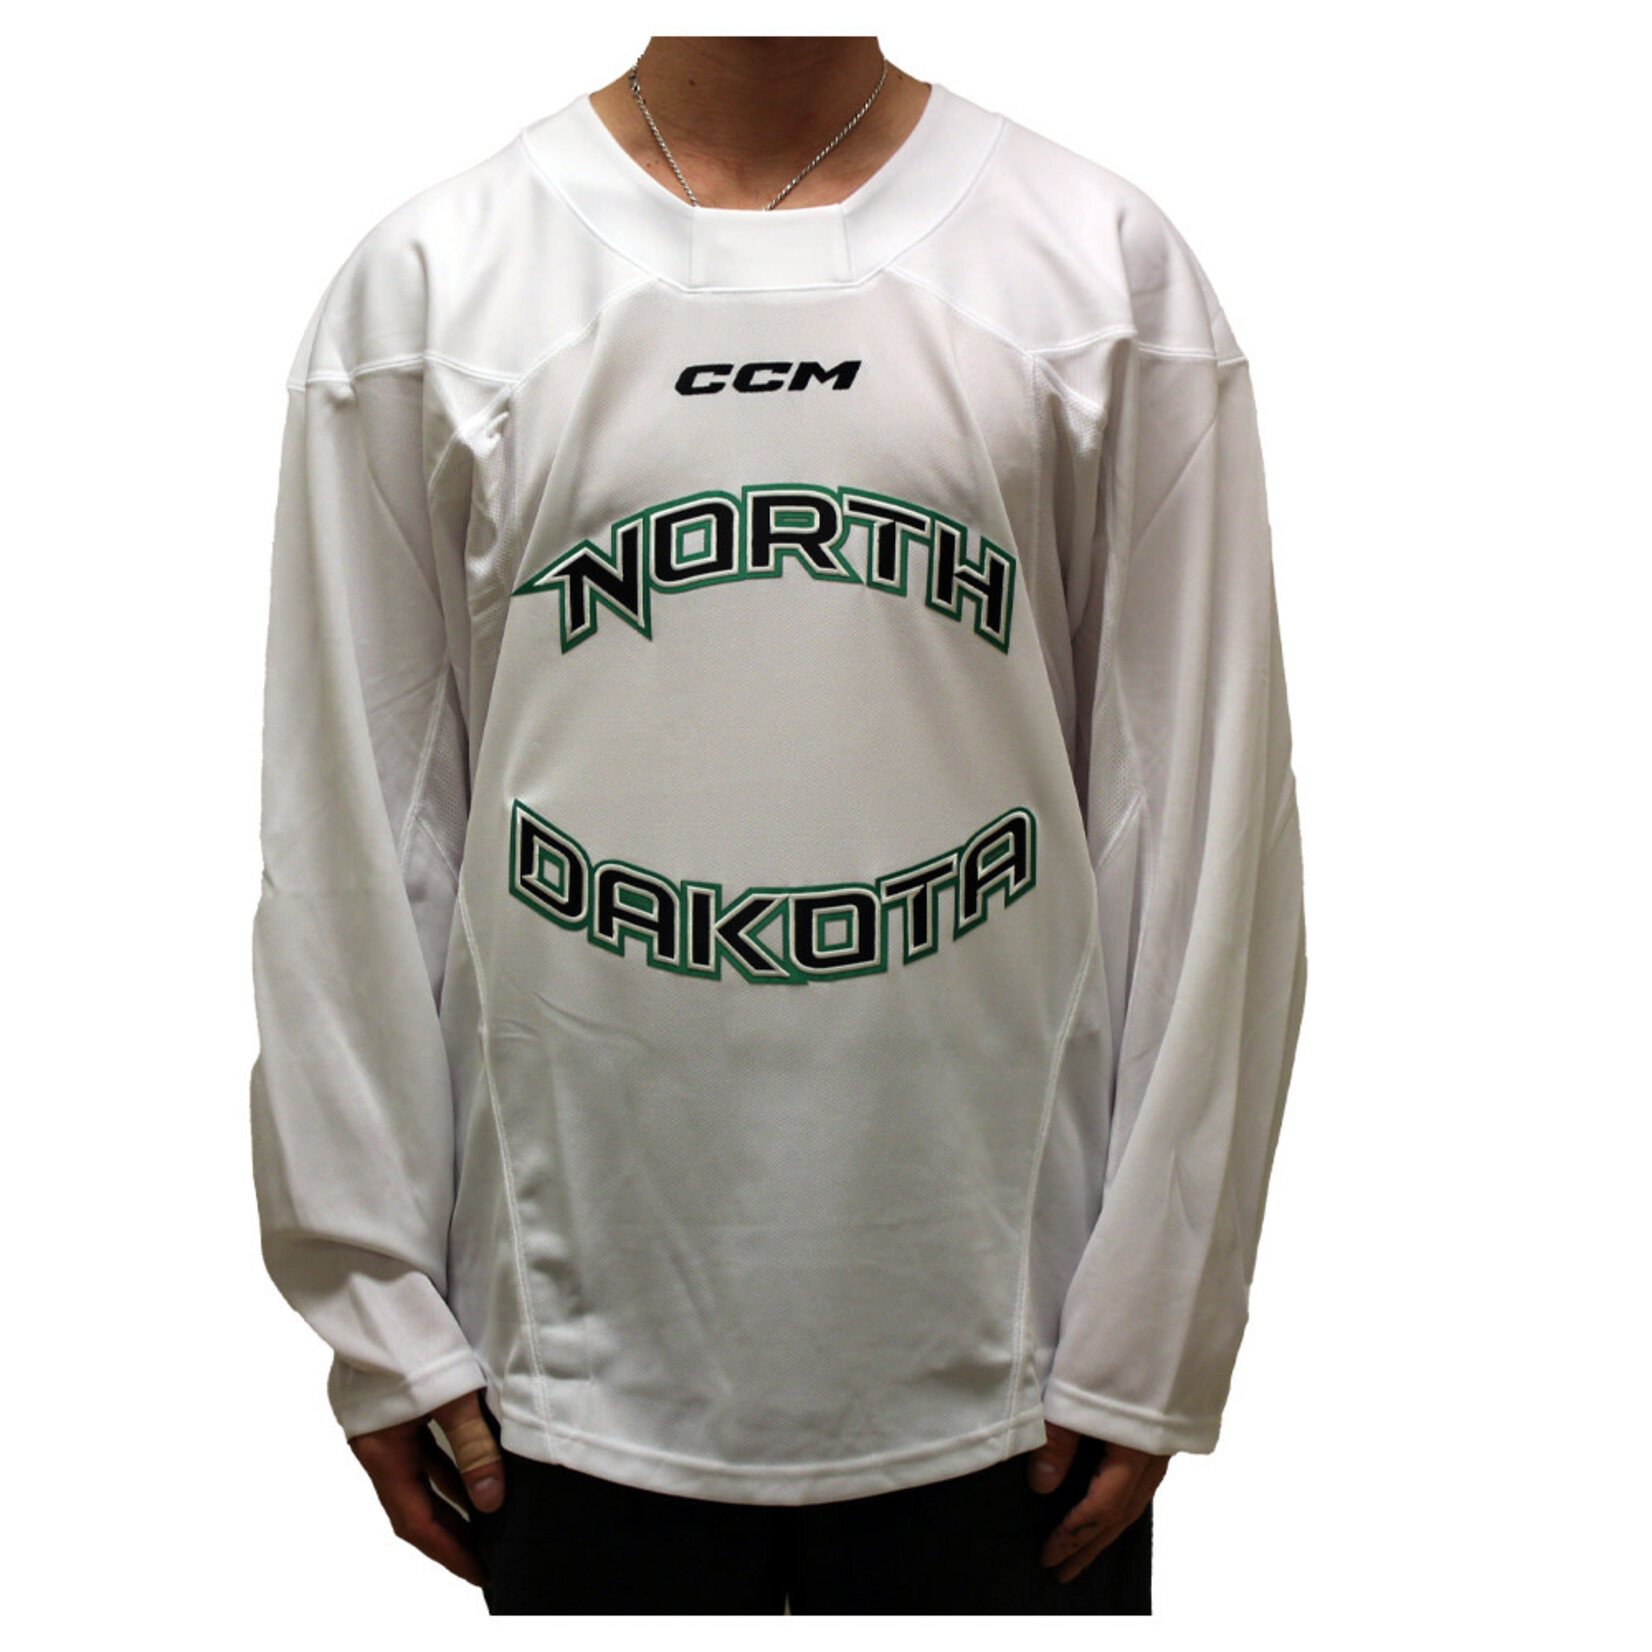 North Dakota Hockey Jersey